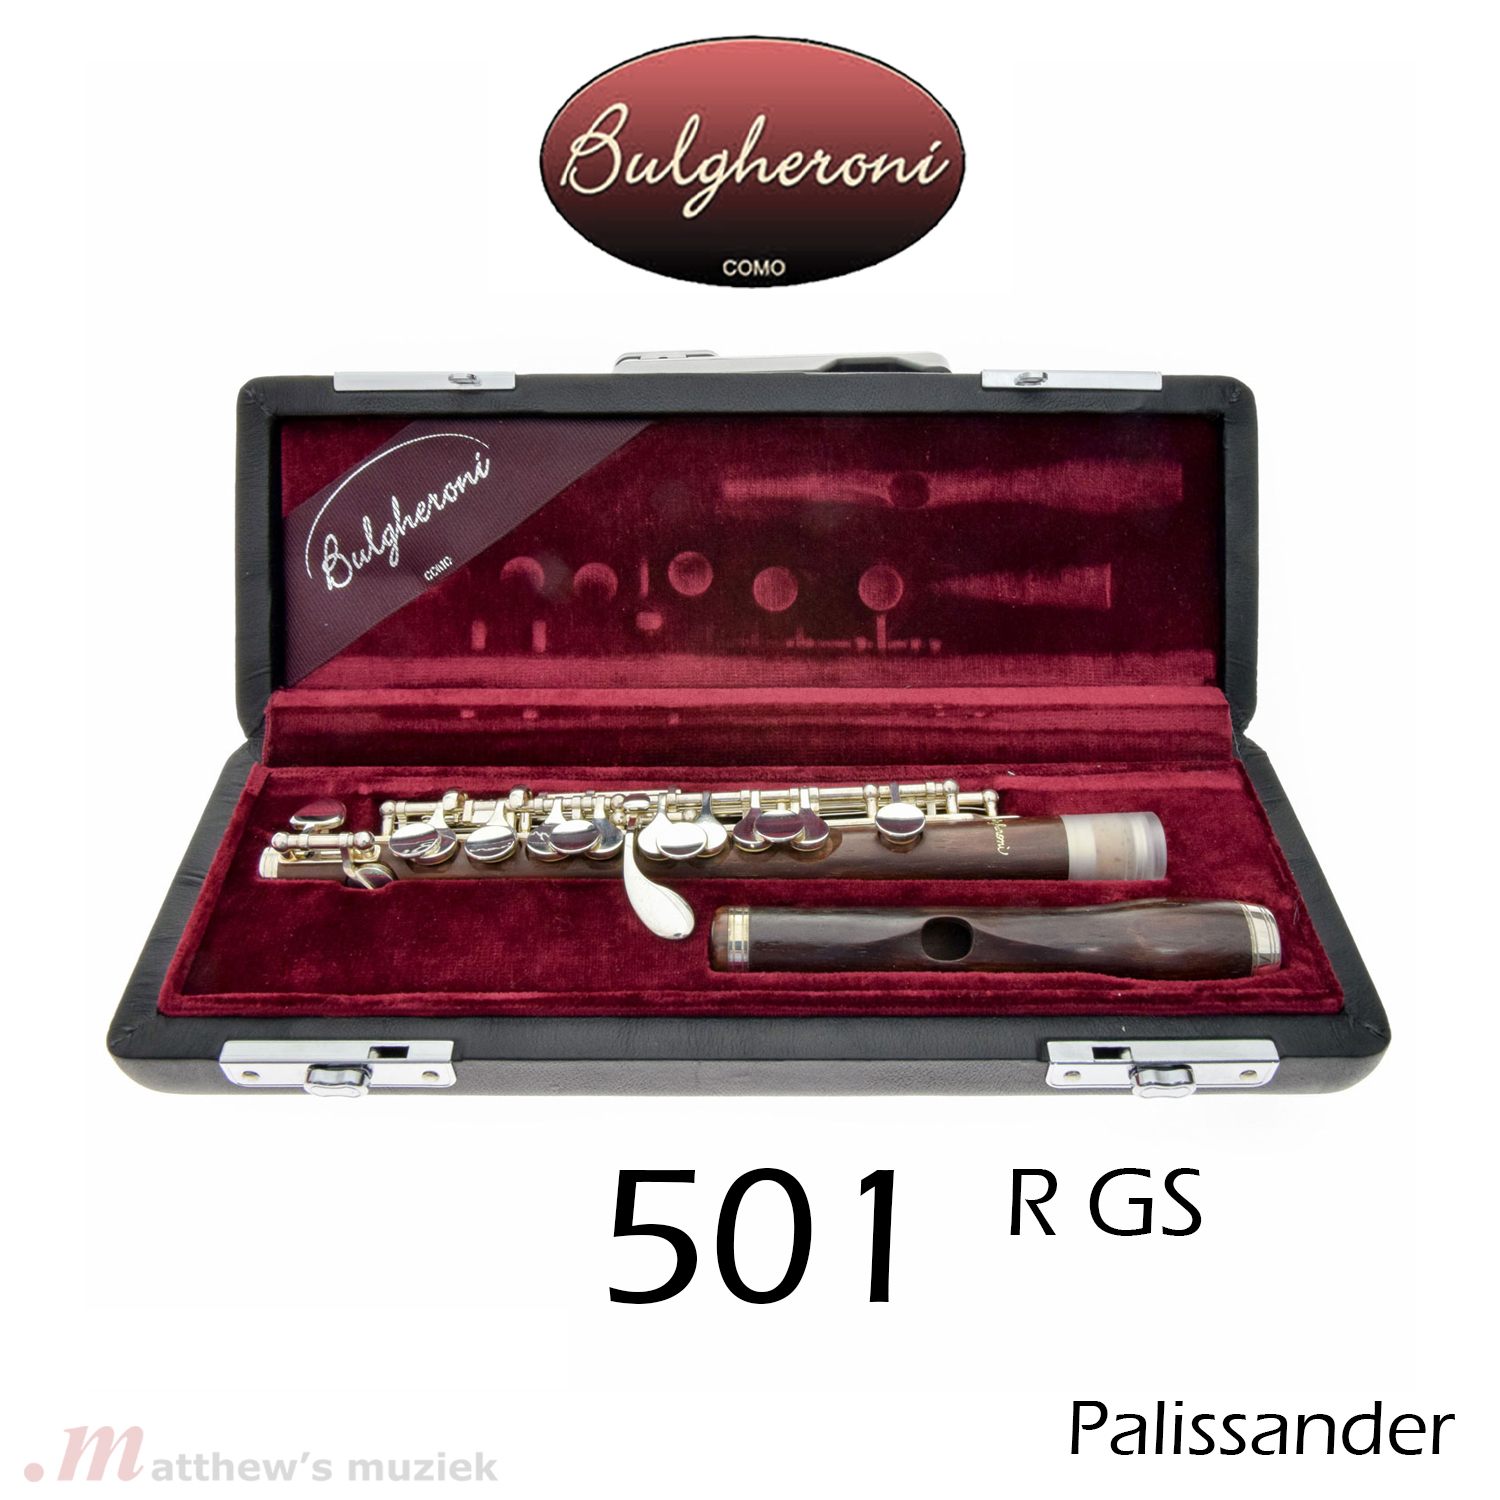 Bulgheroni Piccolo - 501 R GS Palisander